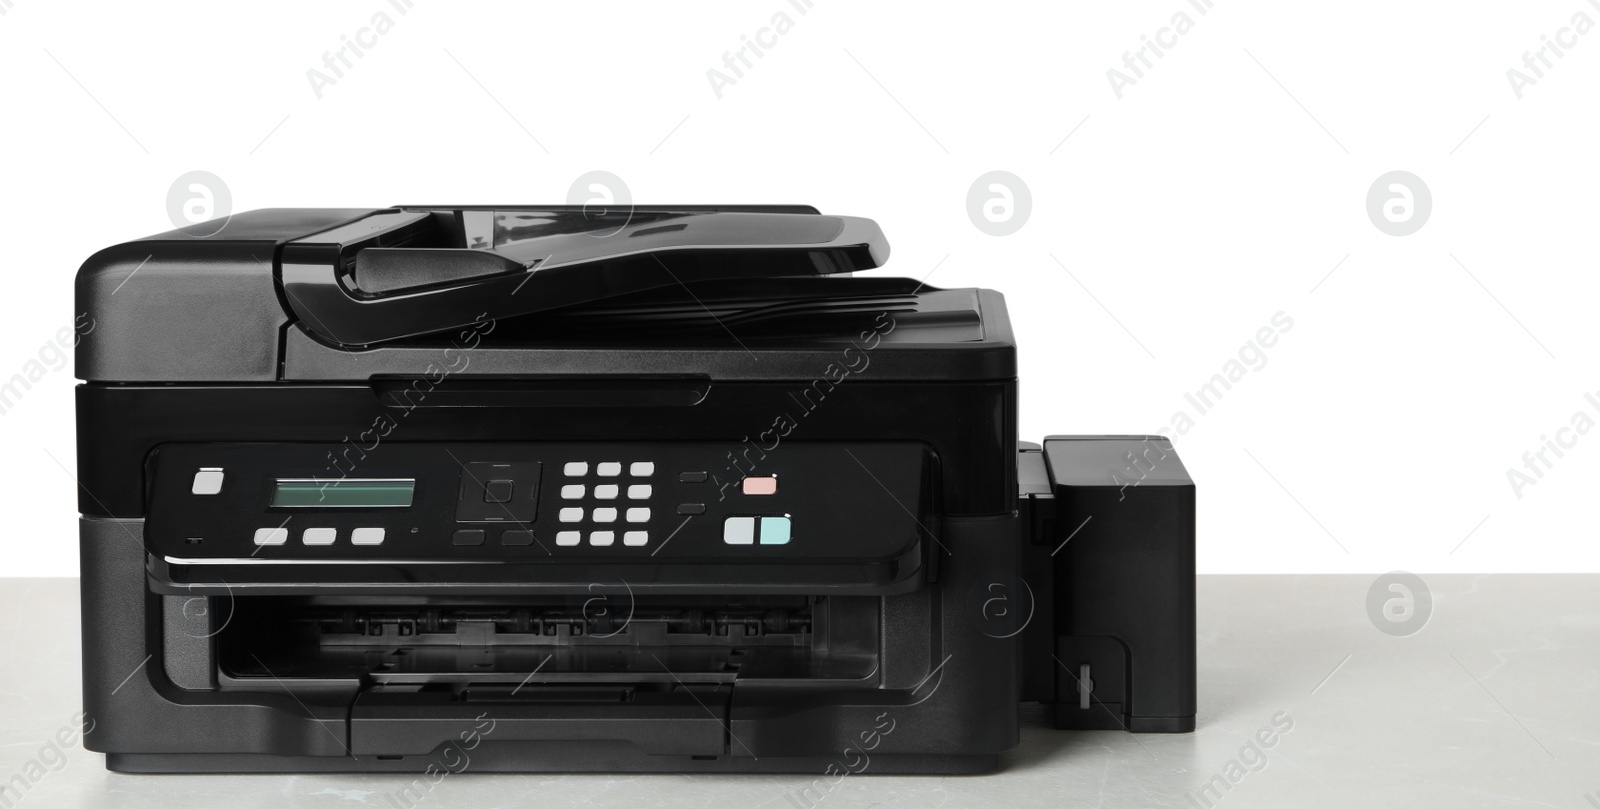 Photo of New modern multifunction printer on light table